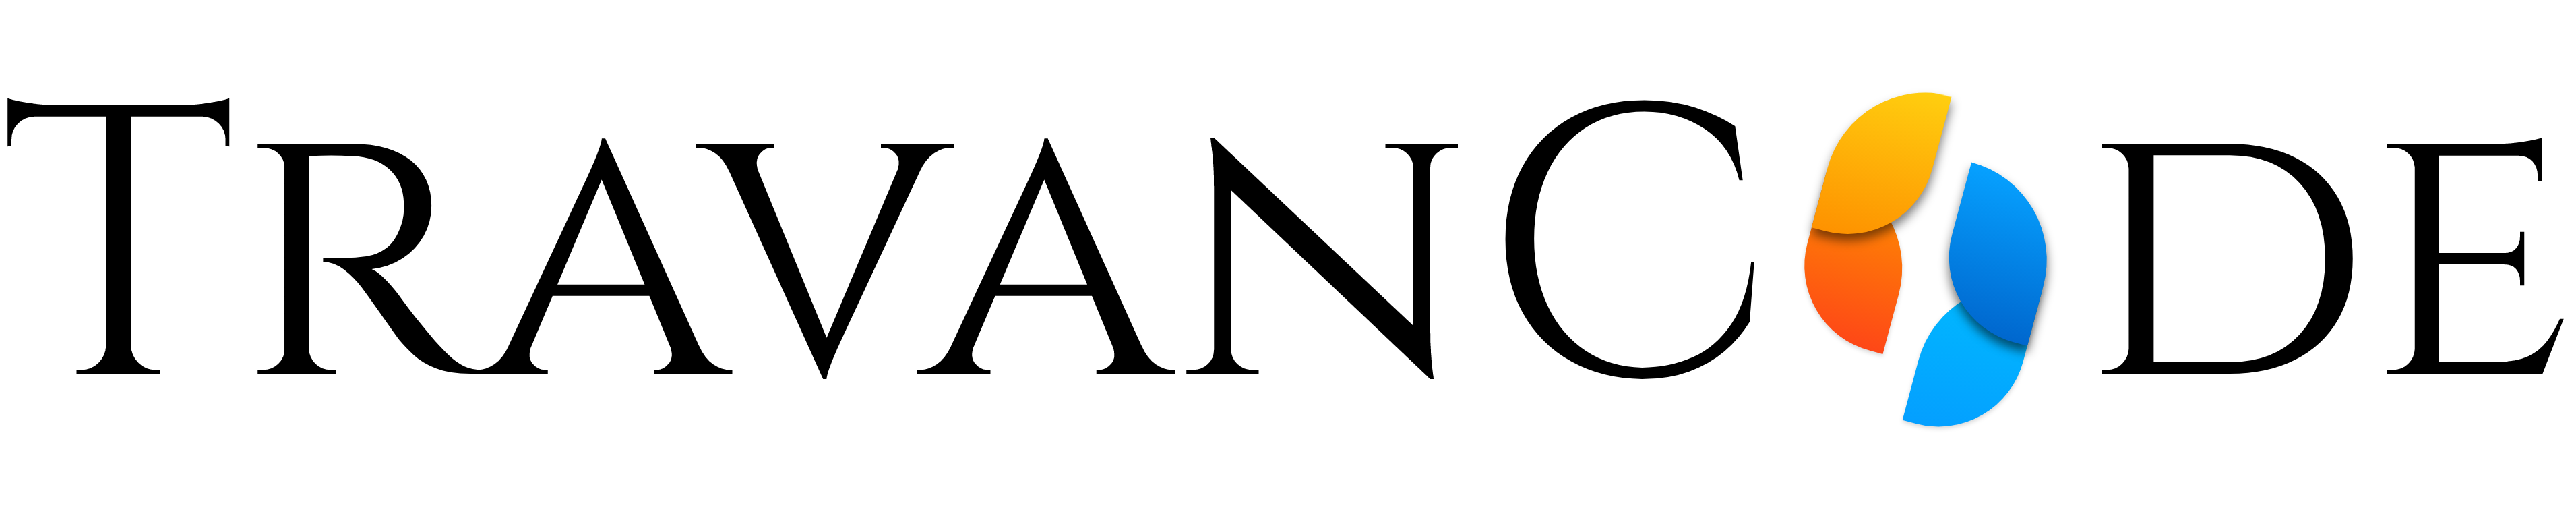 travancode logo